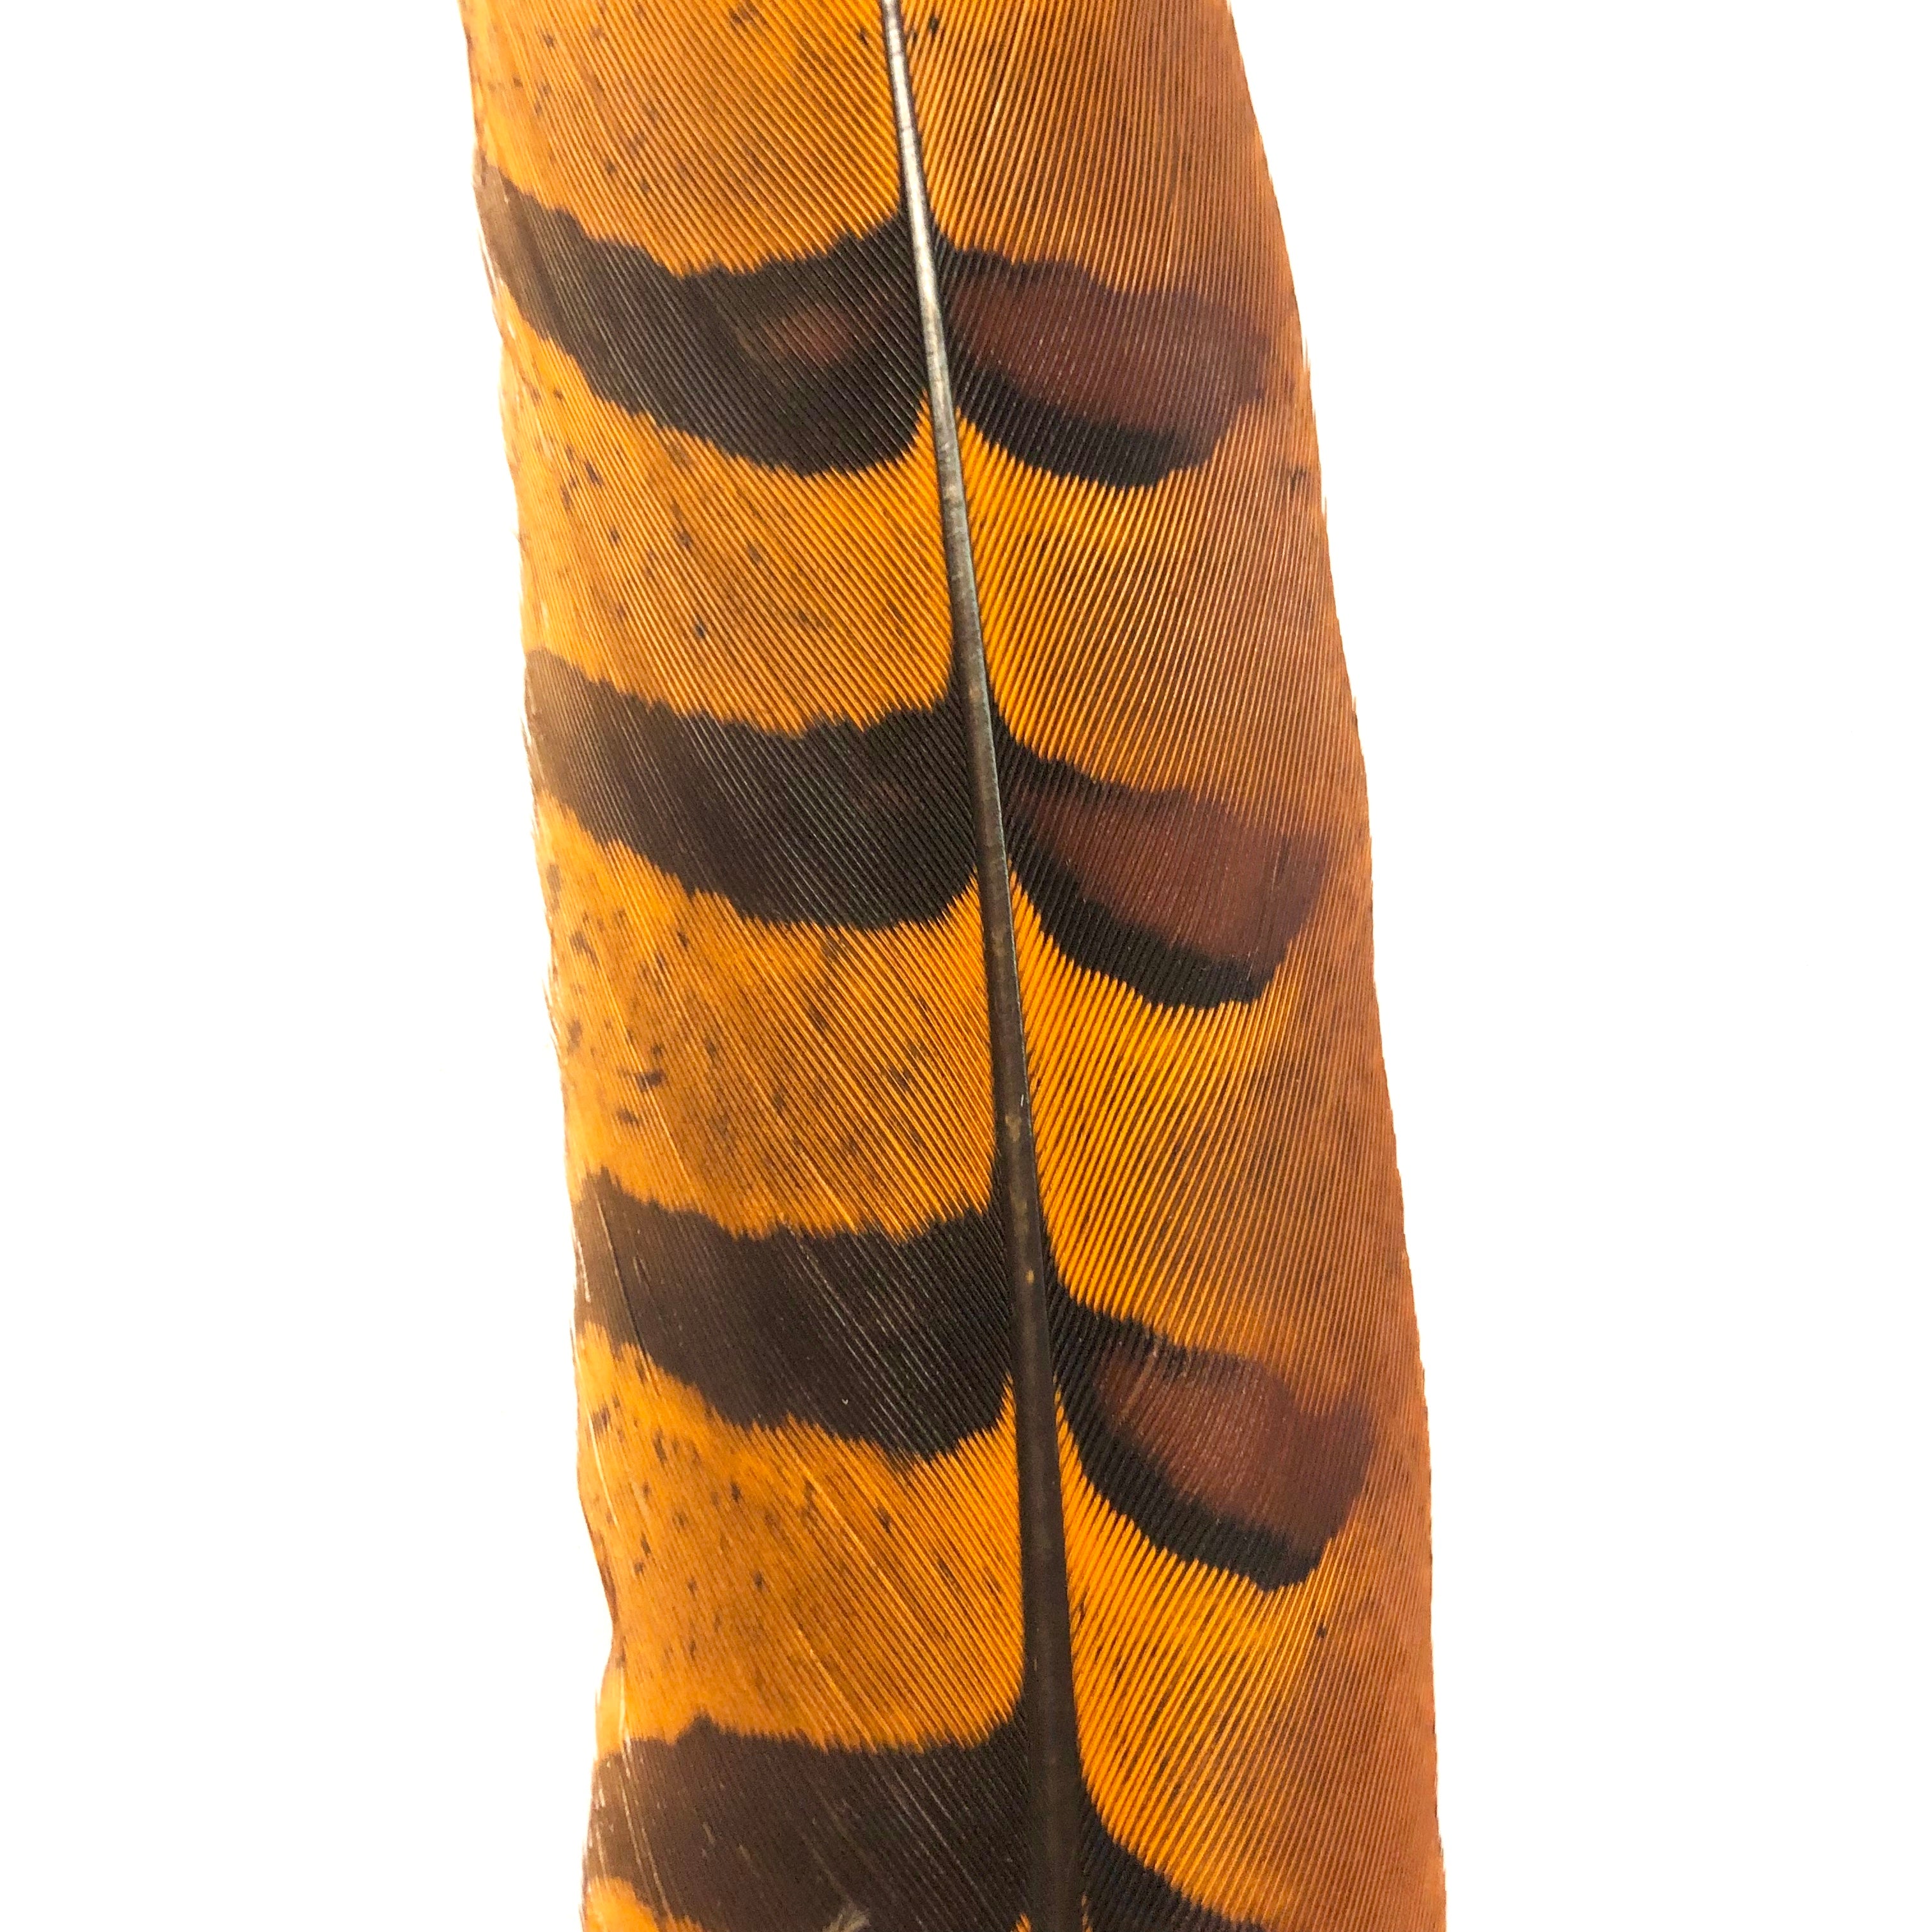 8" to 10" Reeves Pheasant Tail Feather - Orange